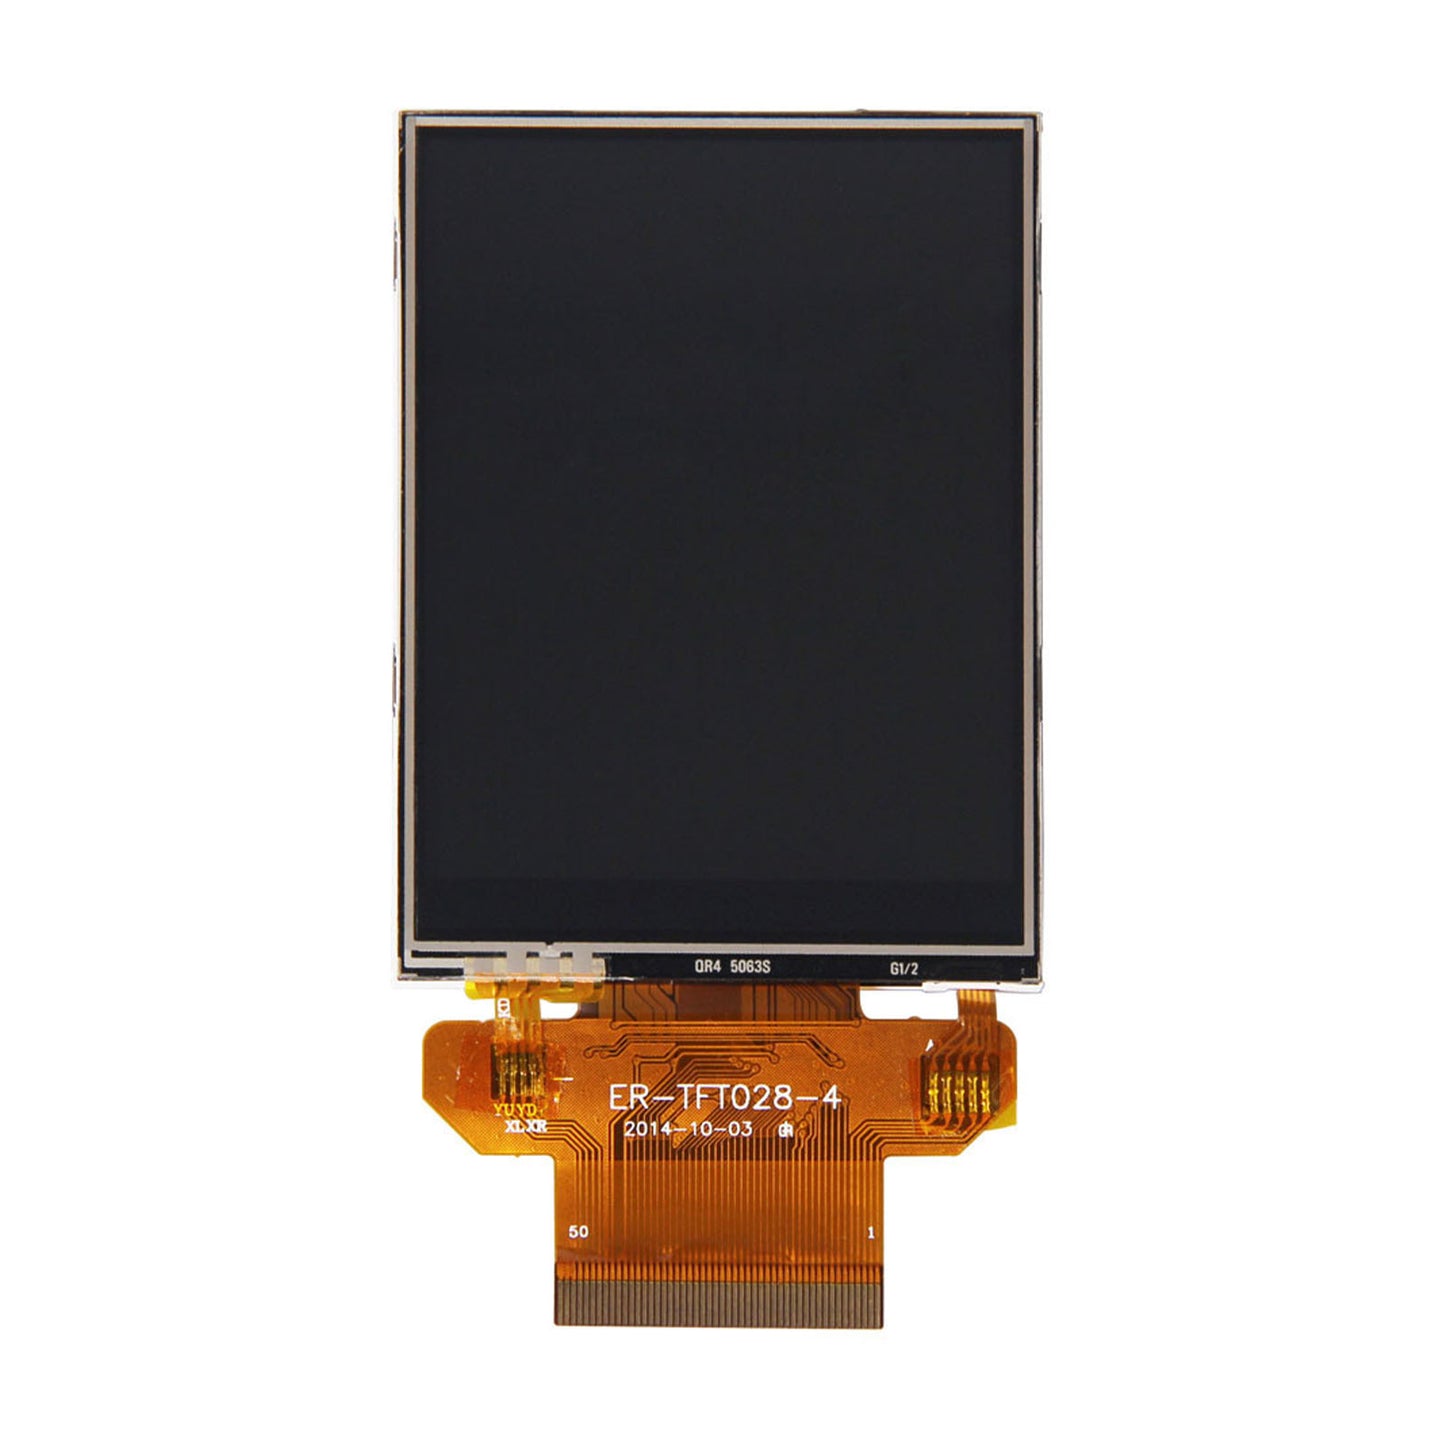 DisplayModule 2.8" 240x320 TFT LCD Display Panel (ILI9341) With Resistive Touch - SPI, MCU, RGB